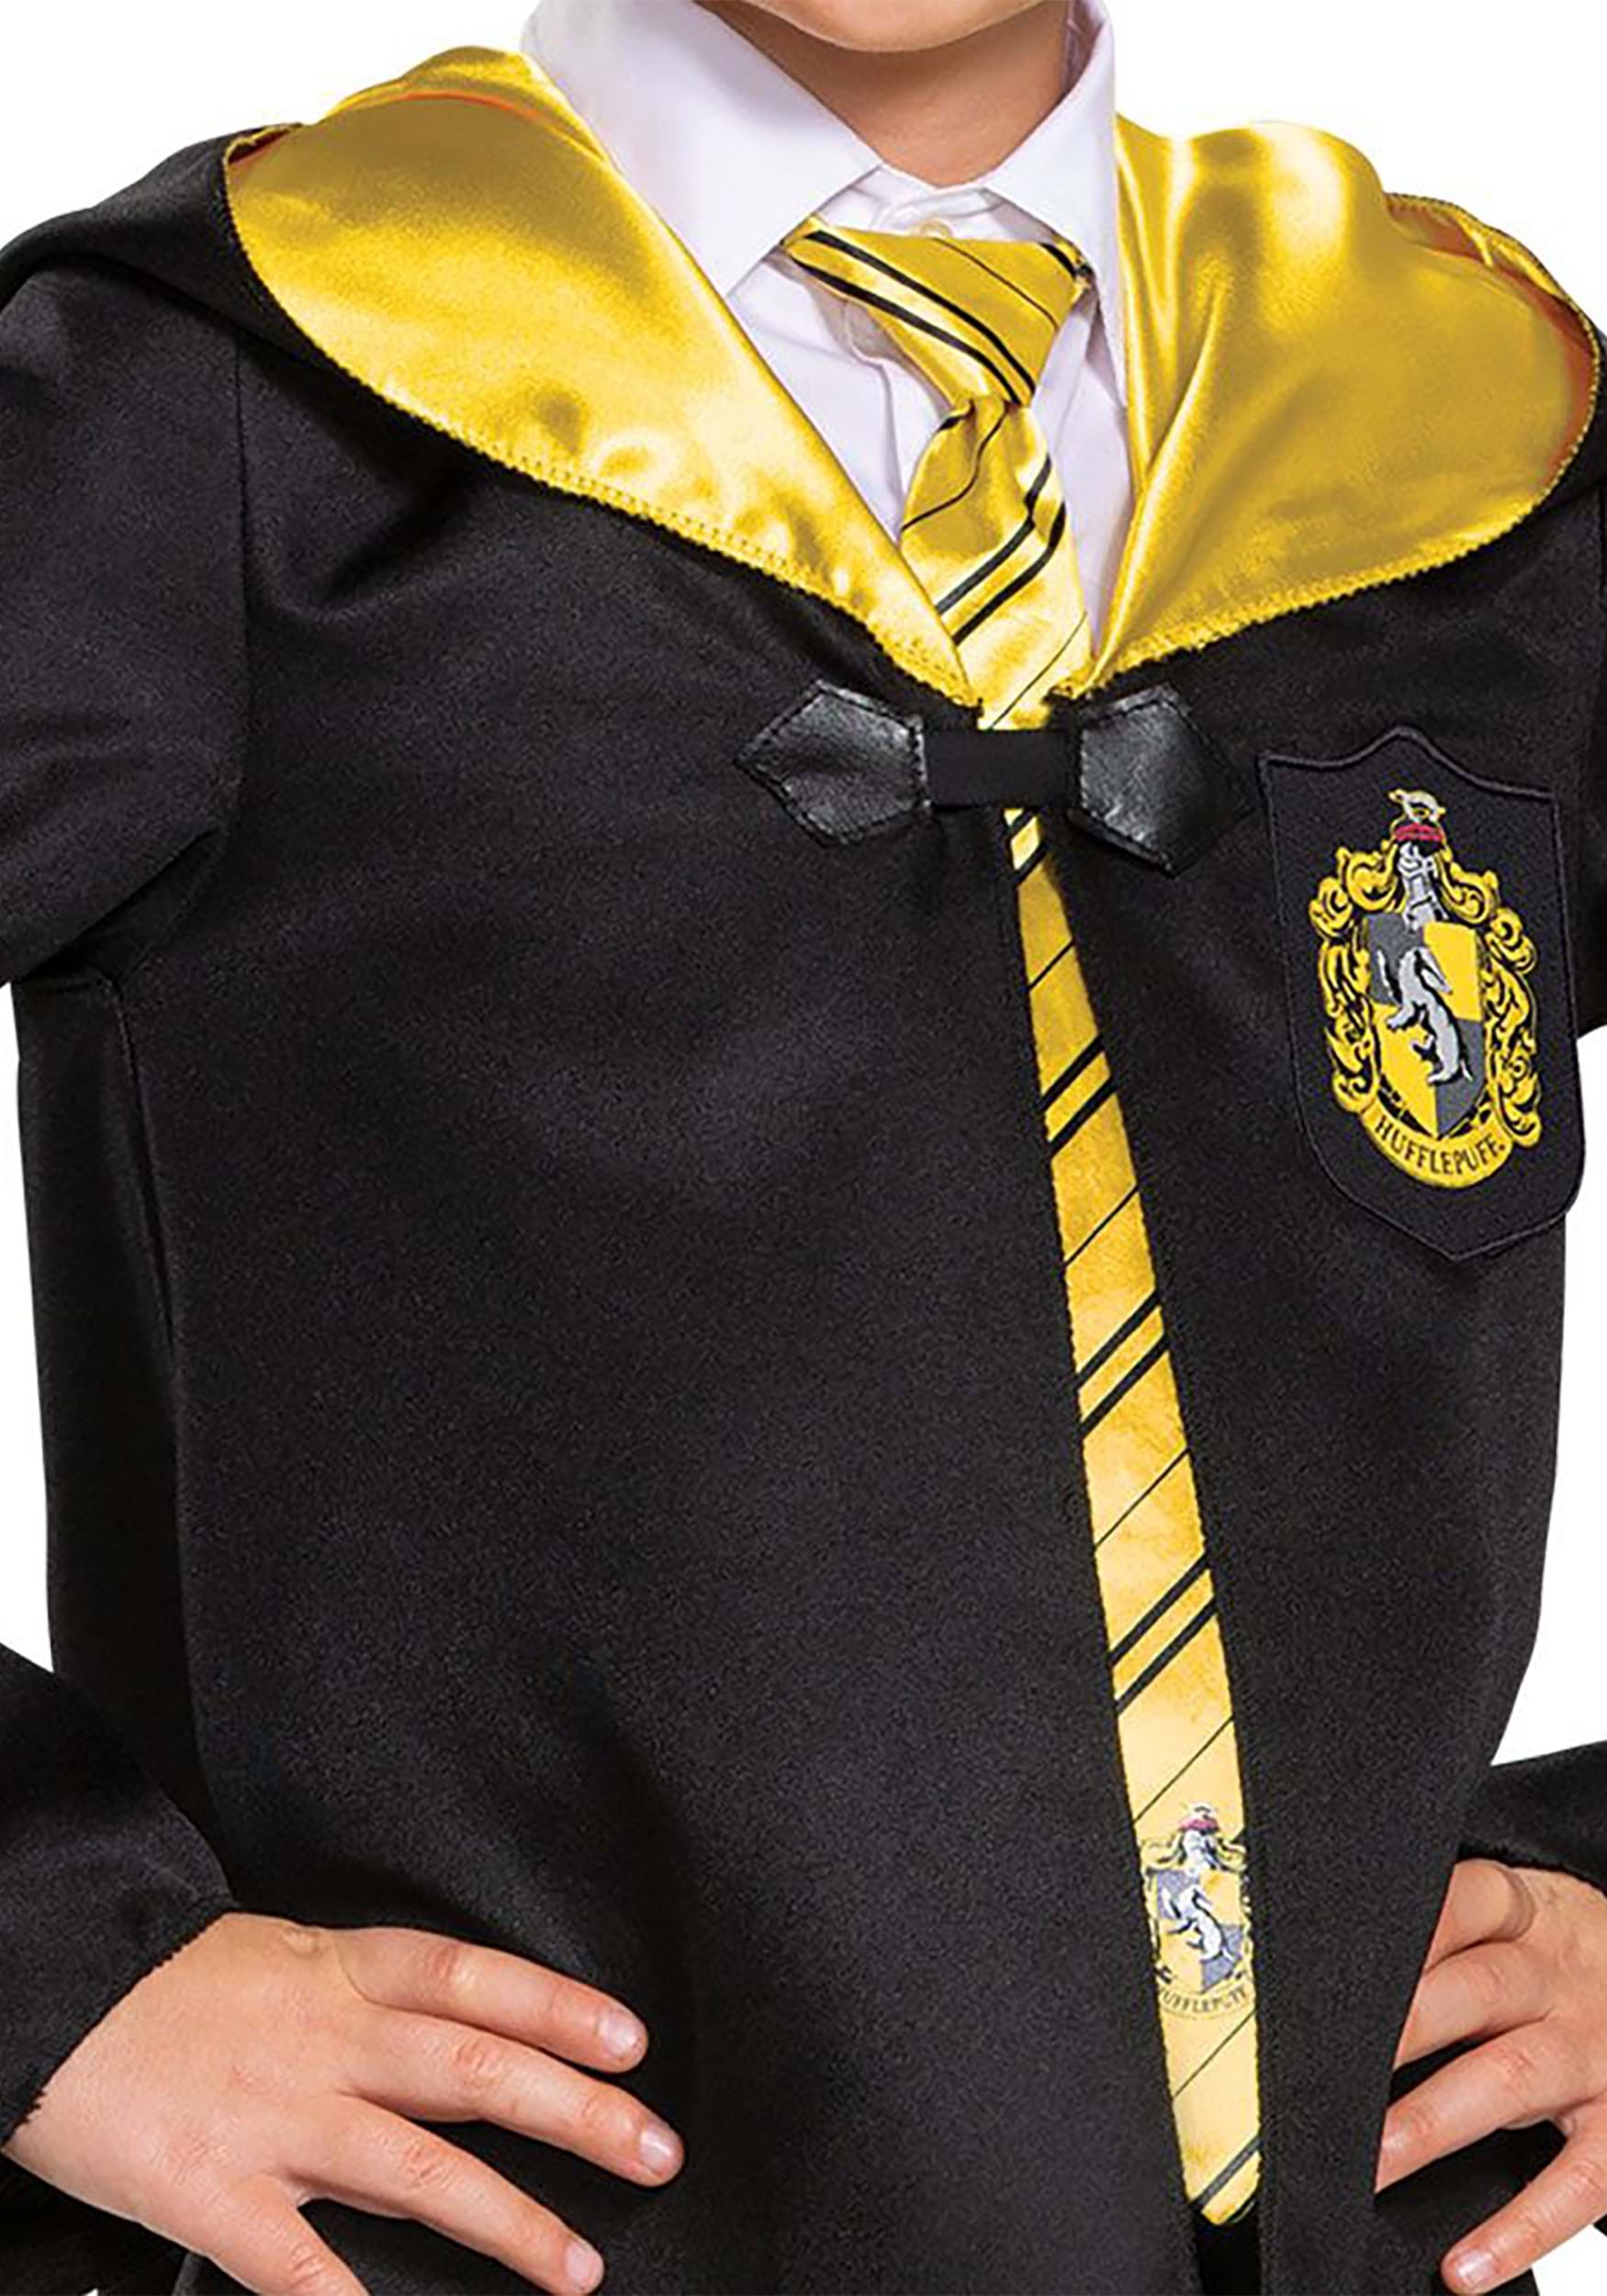 Disfraz de Túnica de Hufflepuff Harry Potter para niños